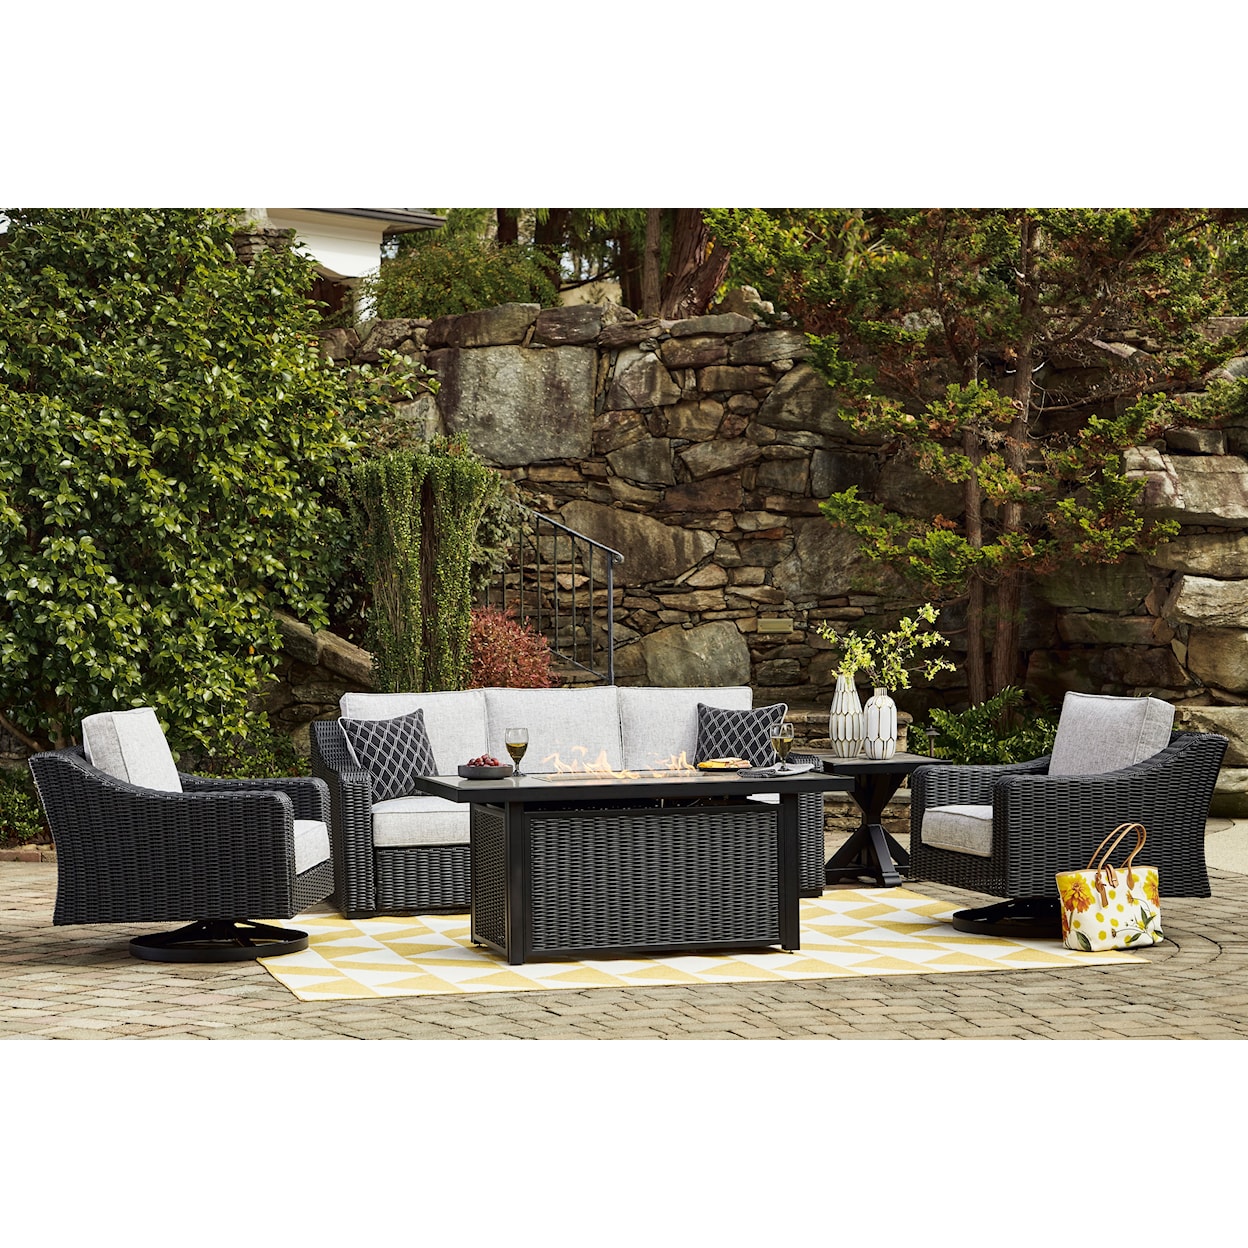 Ashley Furniture Signature Design Beachcroft Outdoor Group